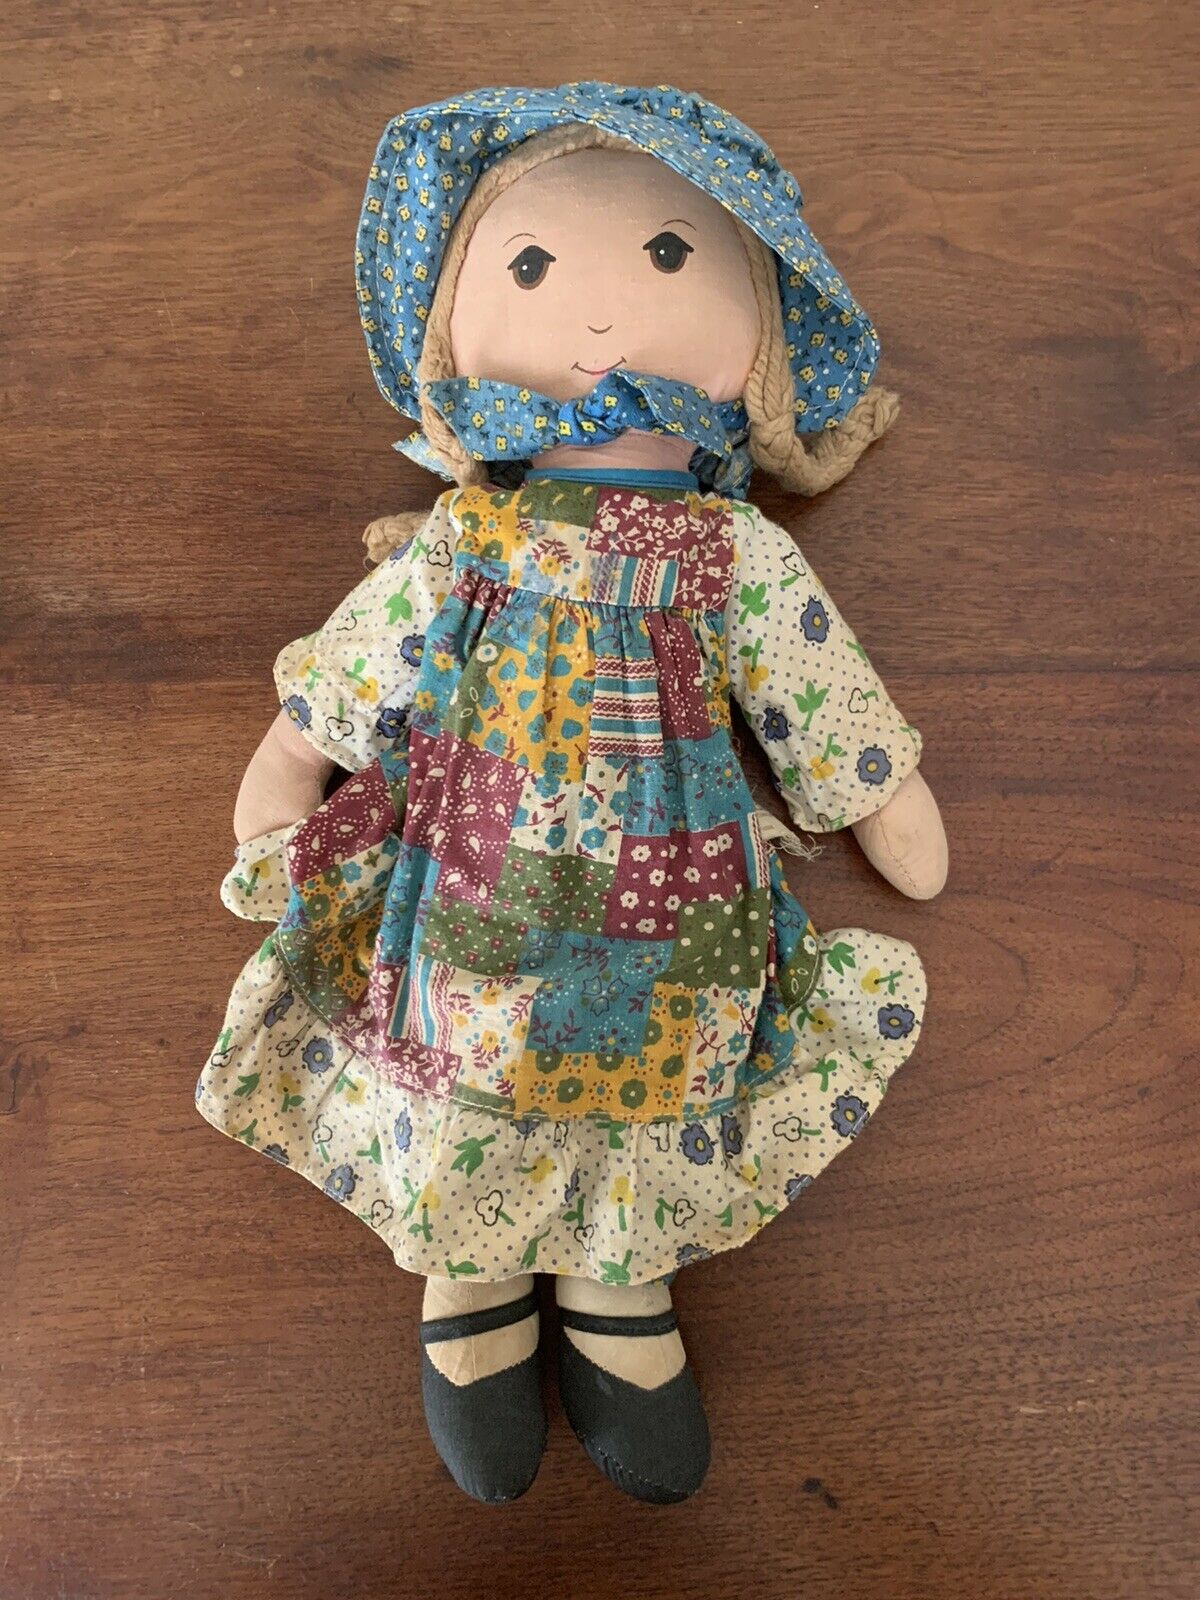 1970s Knickerbocker Holly Hobbie/hobby 15" Rag Doll Tagged Clothes/apron Vintsge